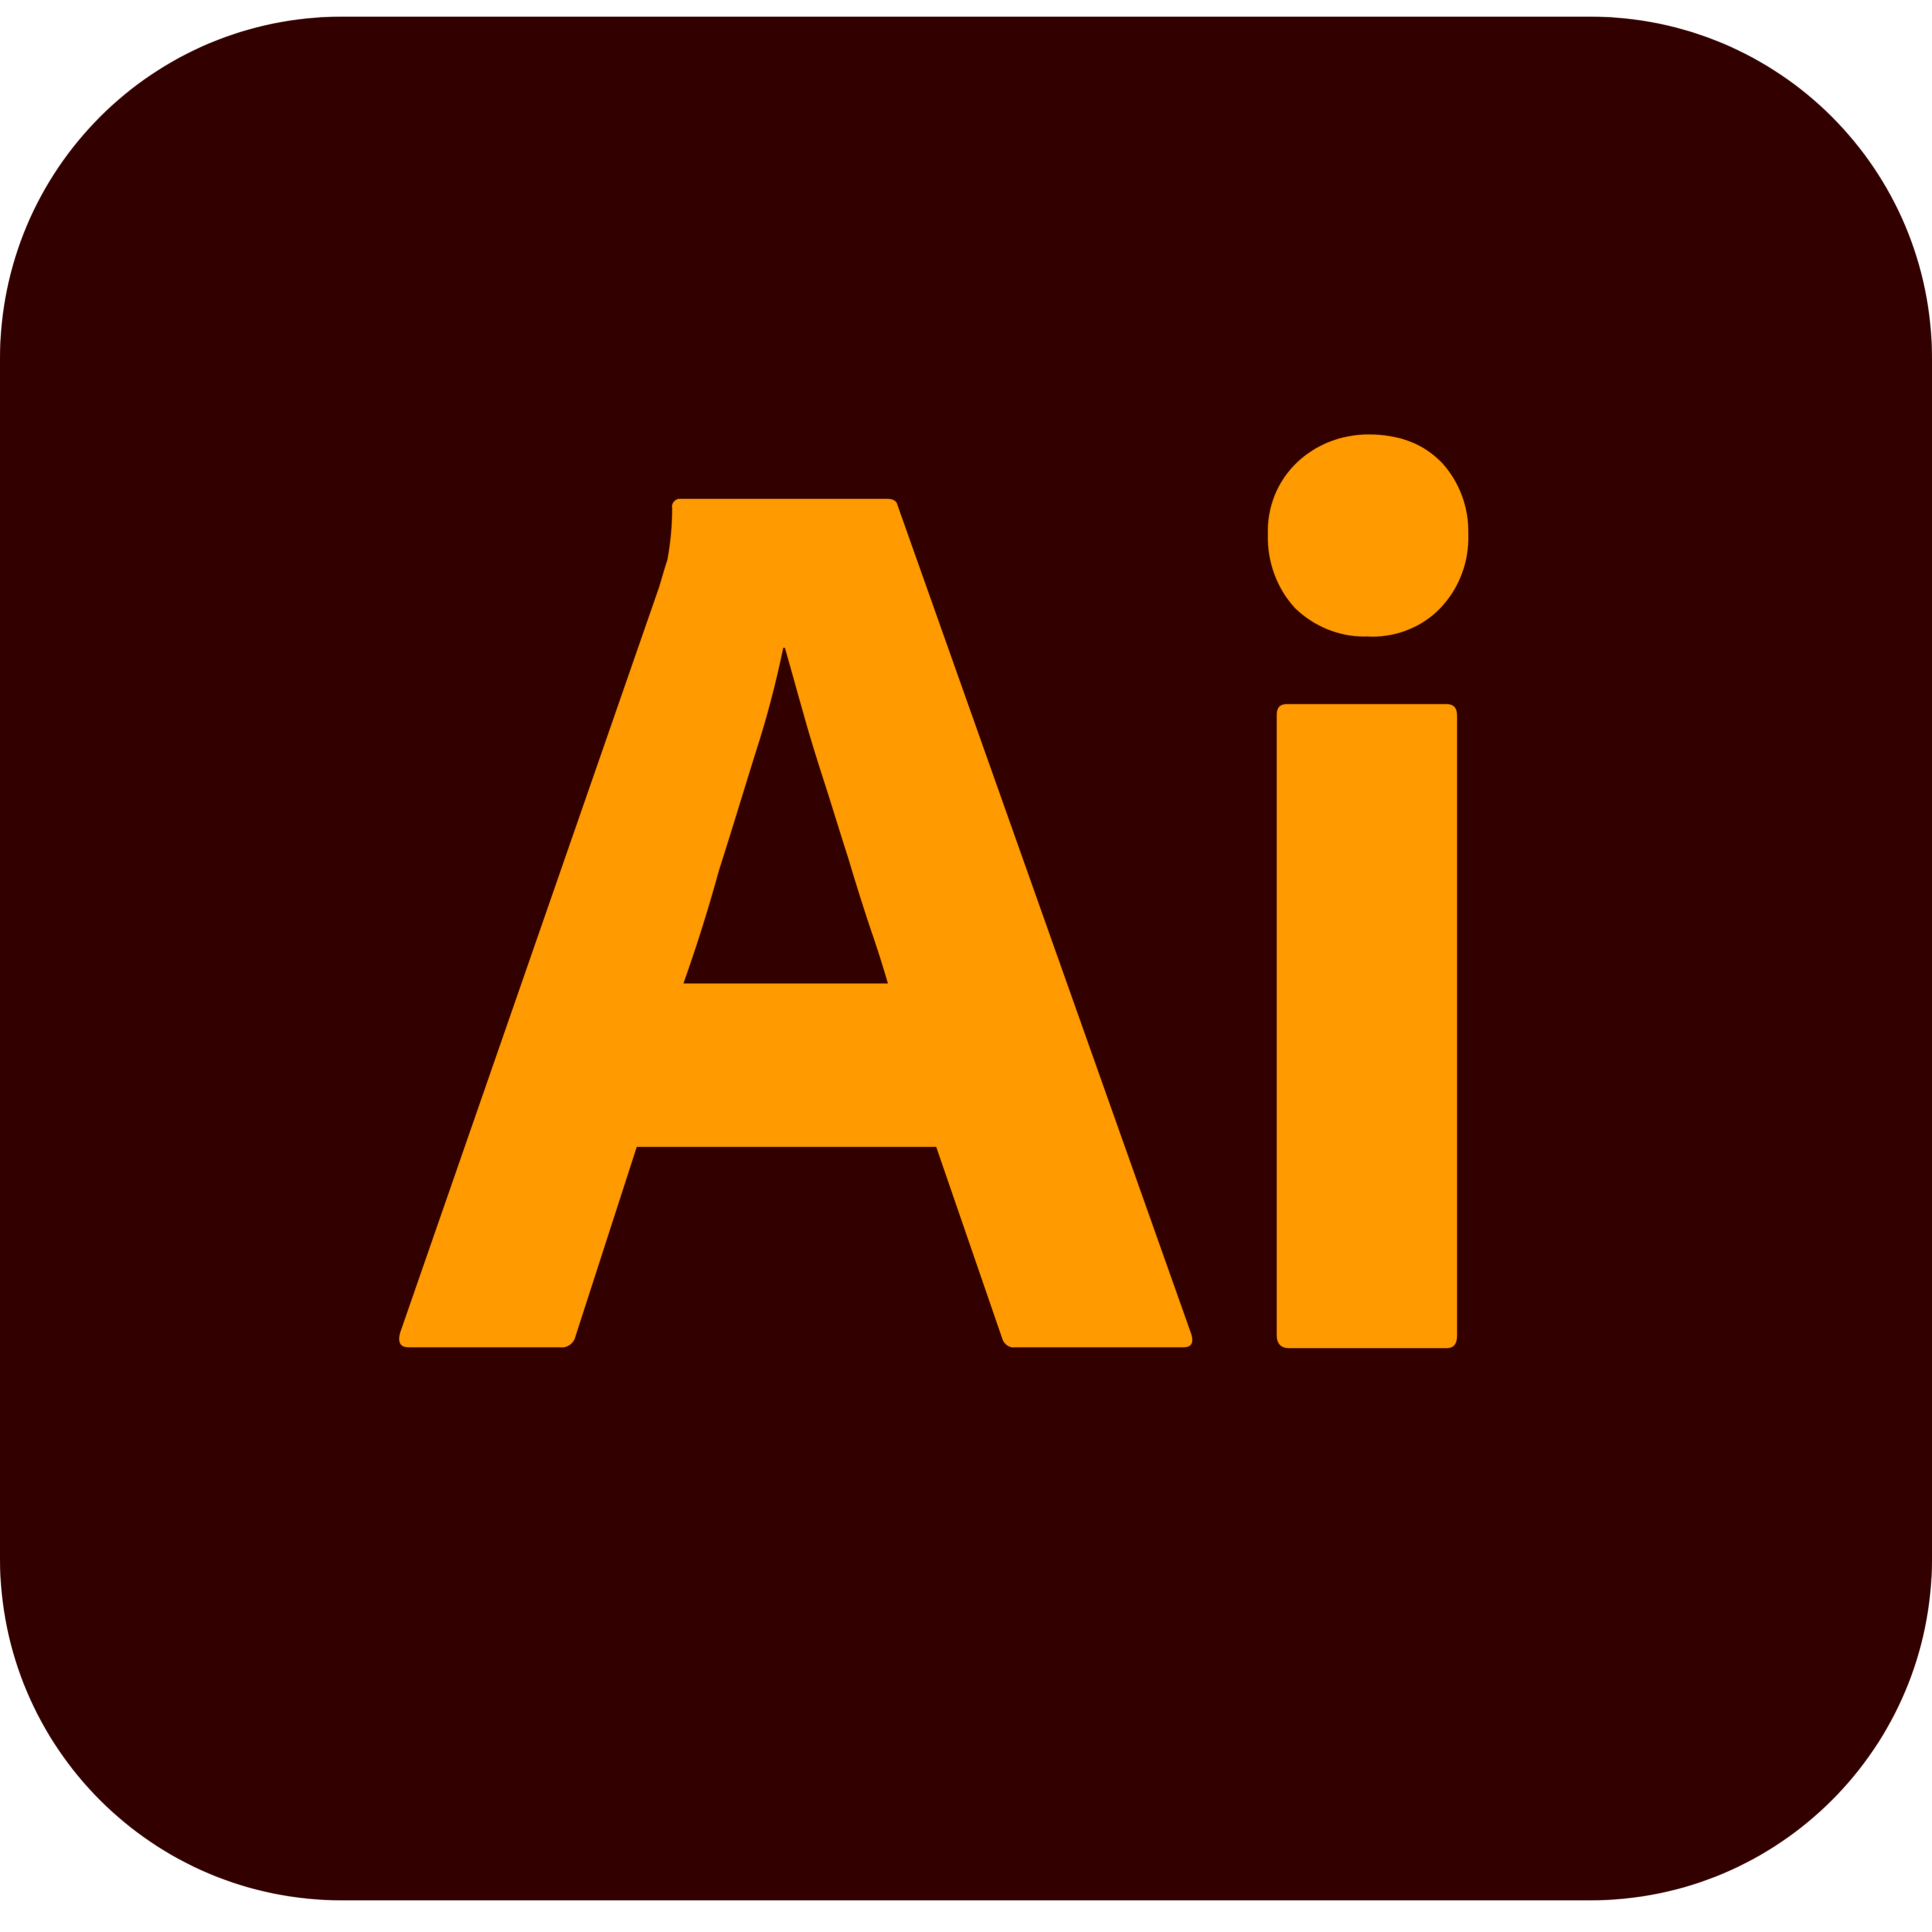 Адобе иллюстратор логотип. Адобе иллюстратор ярлык. Значок Adobe Illustrator. Ai логотип. Ai icon